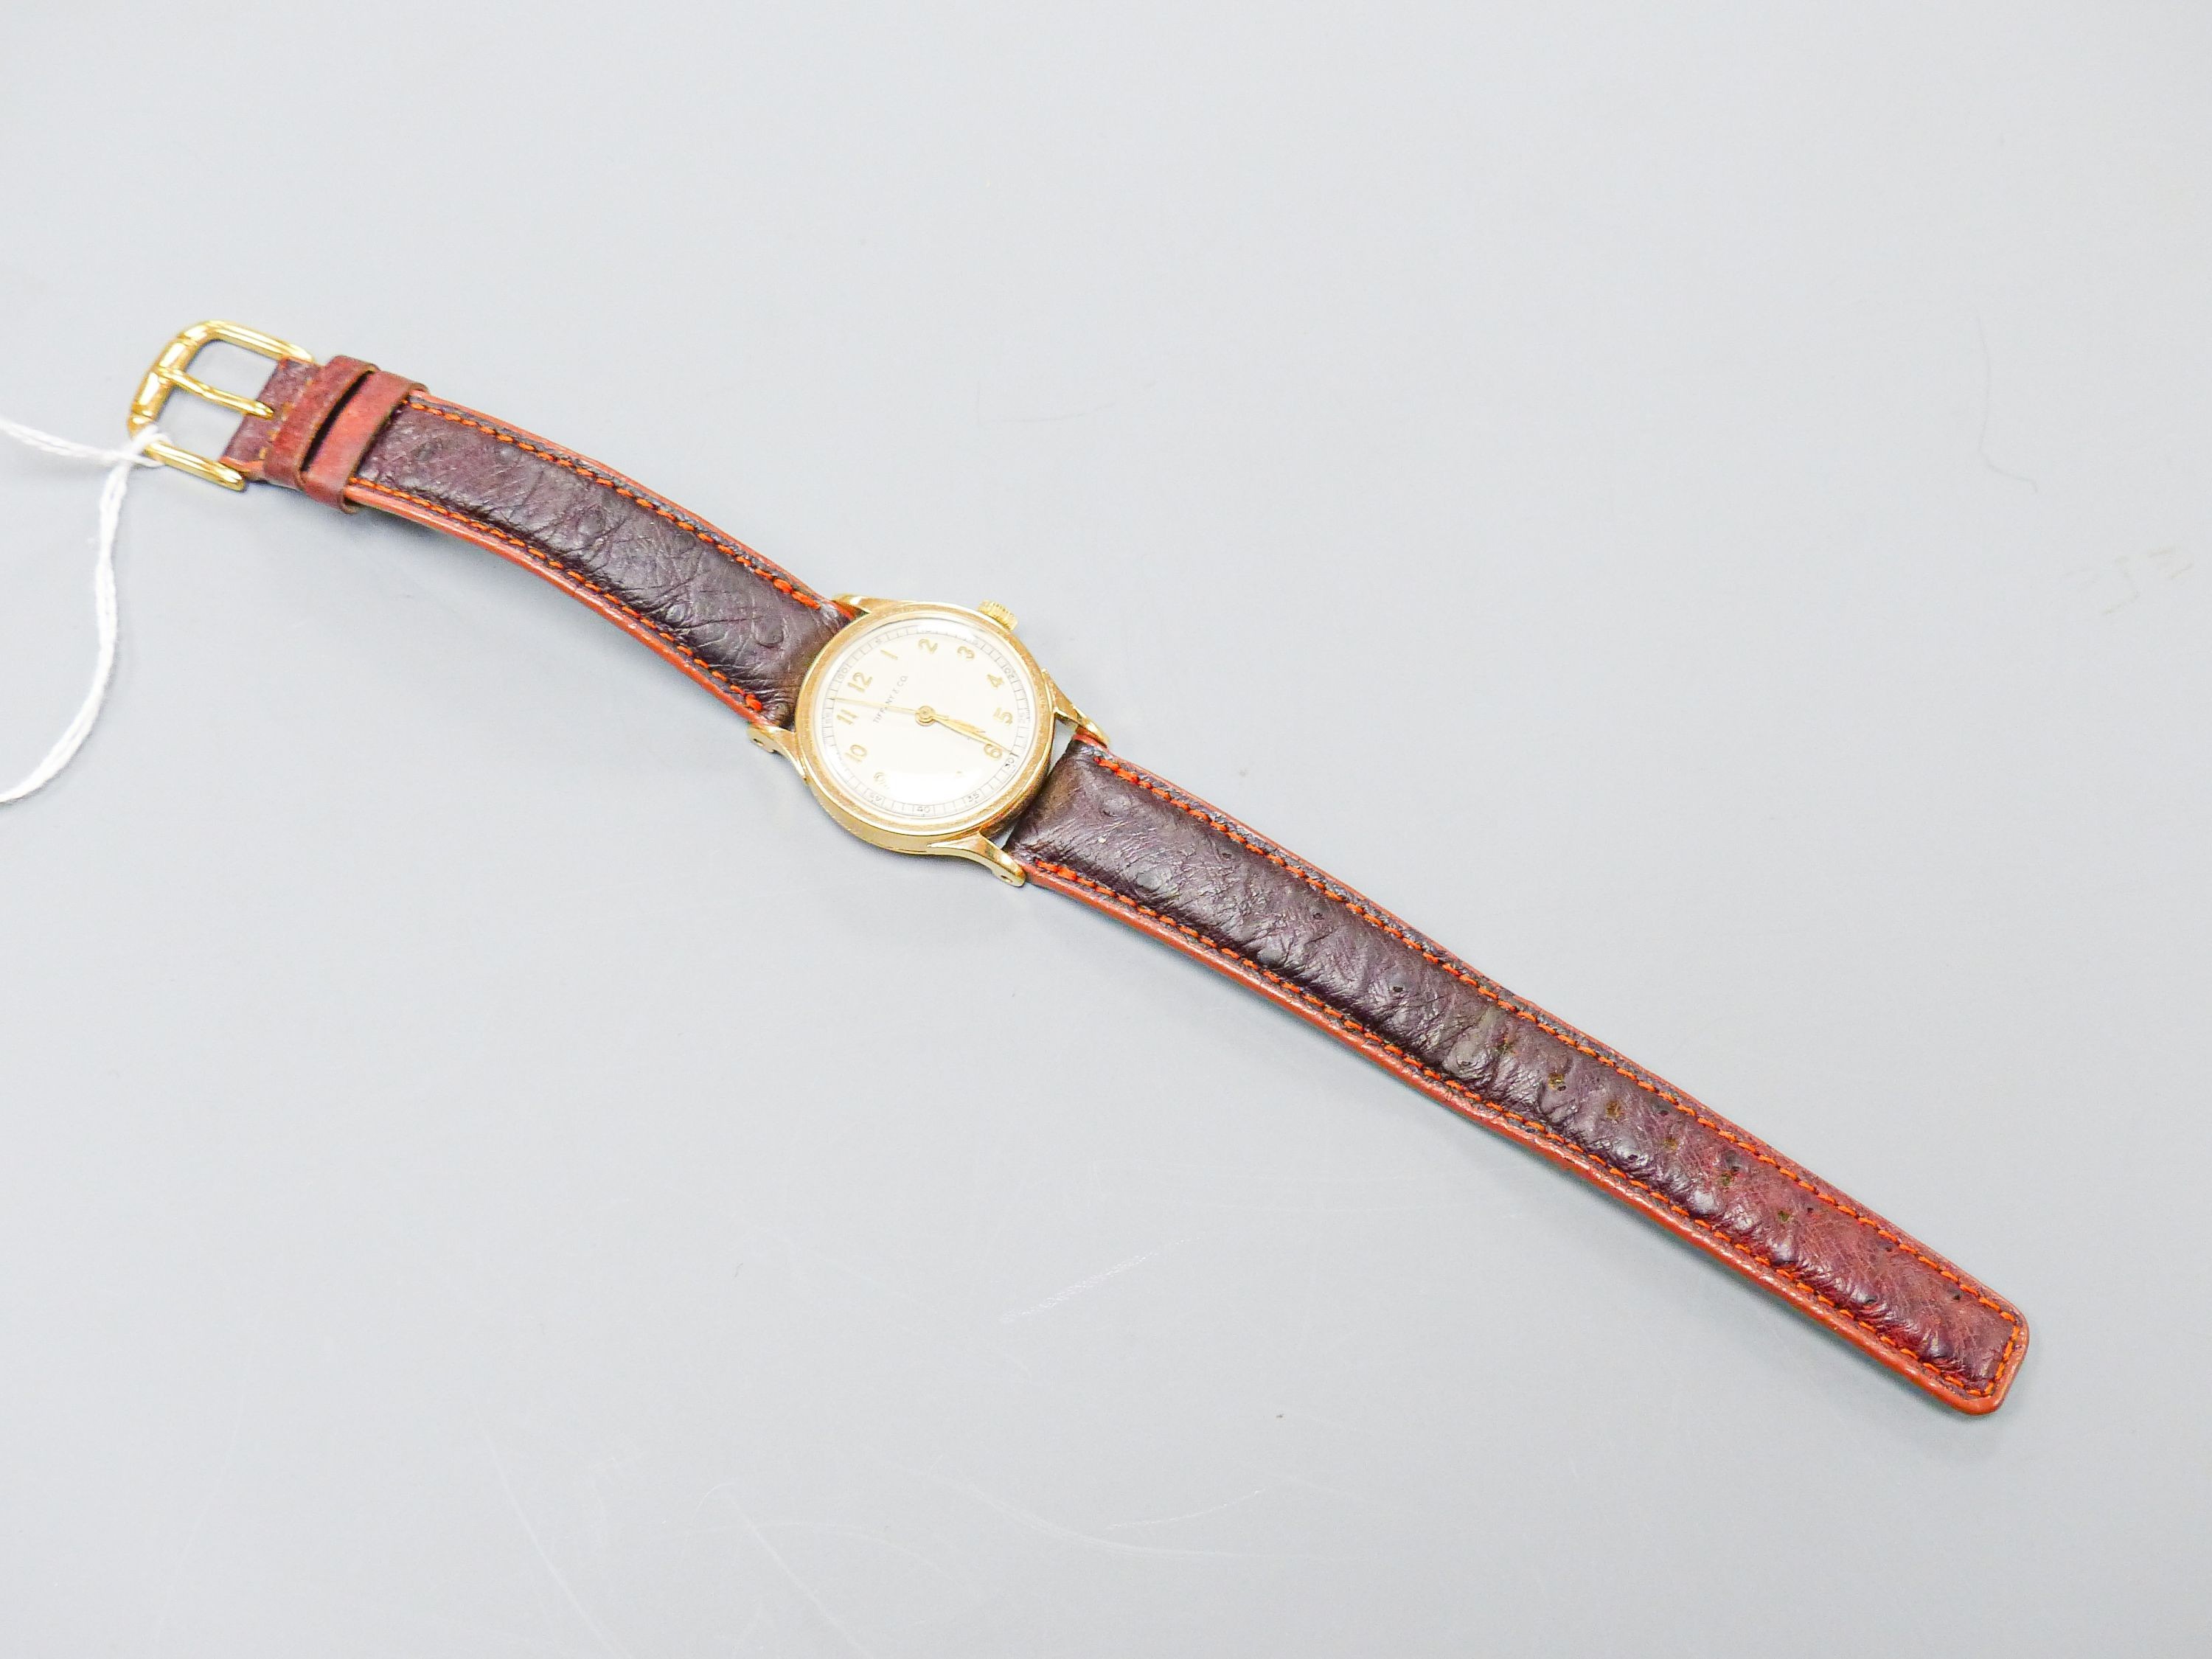 A lady's 14k Tiffany & Co manual wind wrist watch, on associated leather strap, case diameter 27mm, gross weight 28.8 grams.